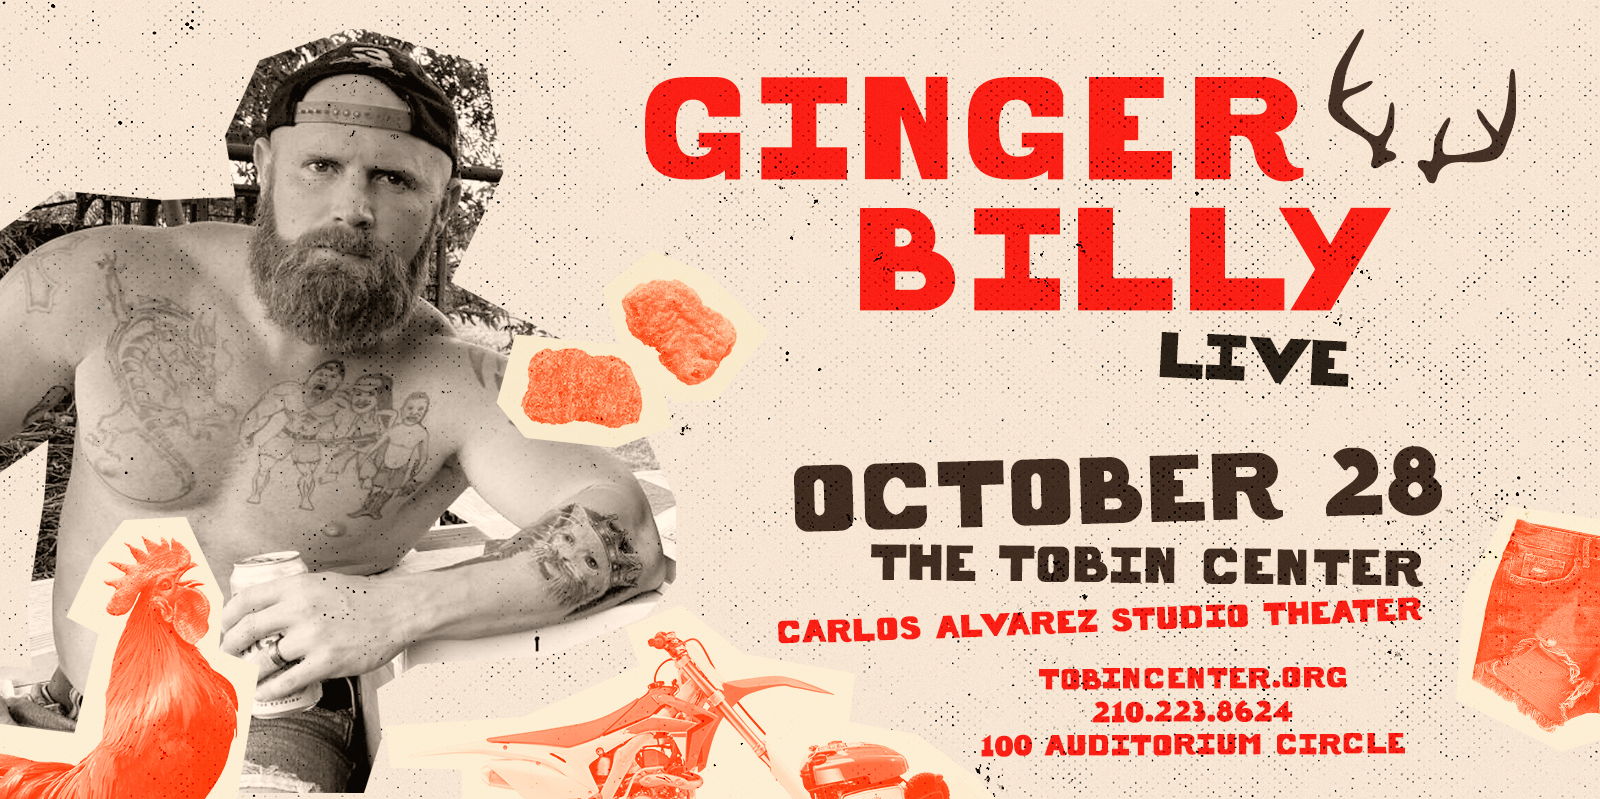 Ginger Billy promotional image